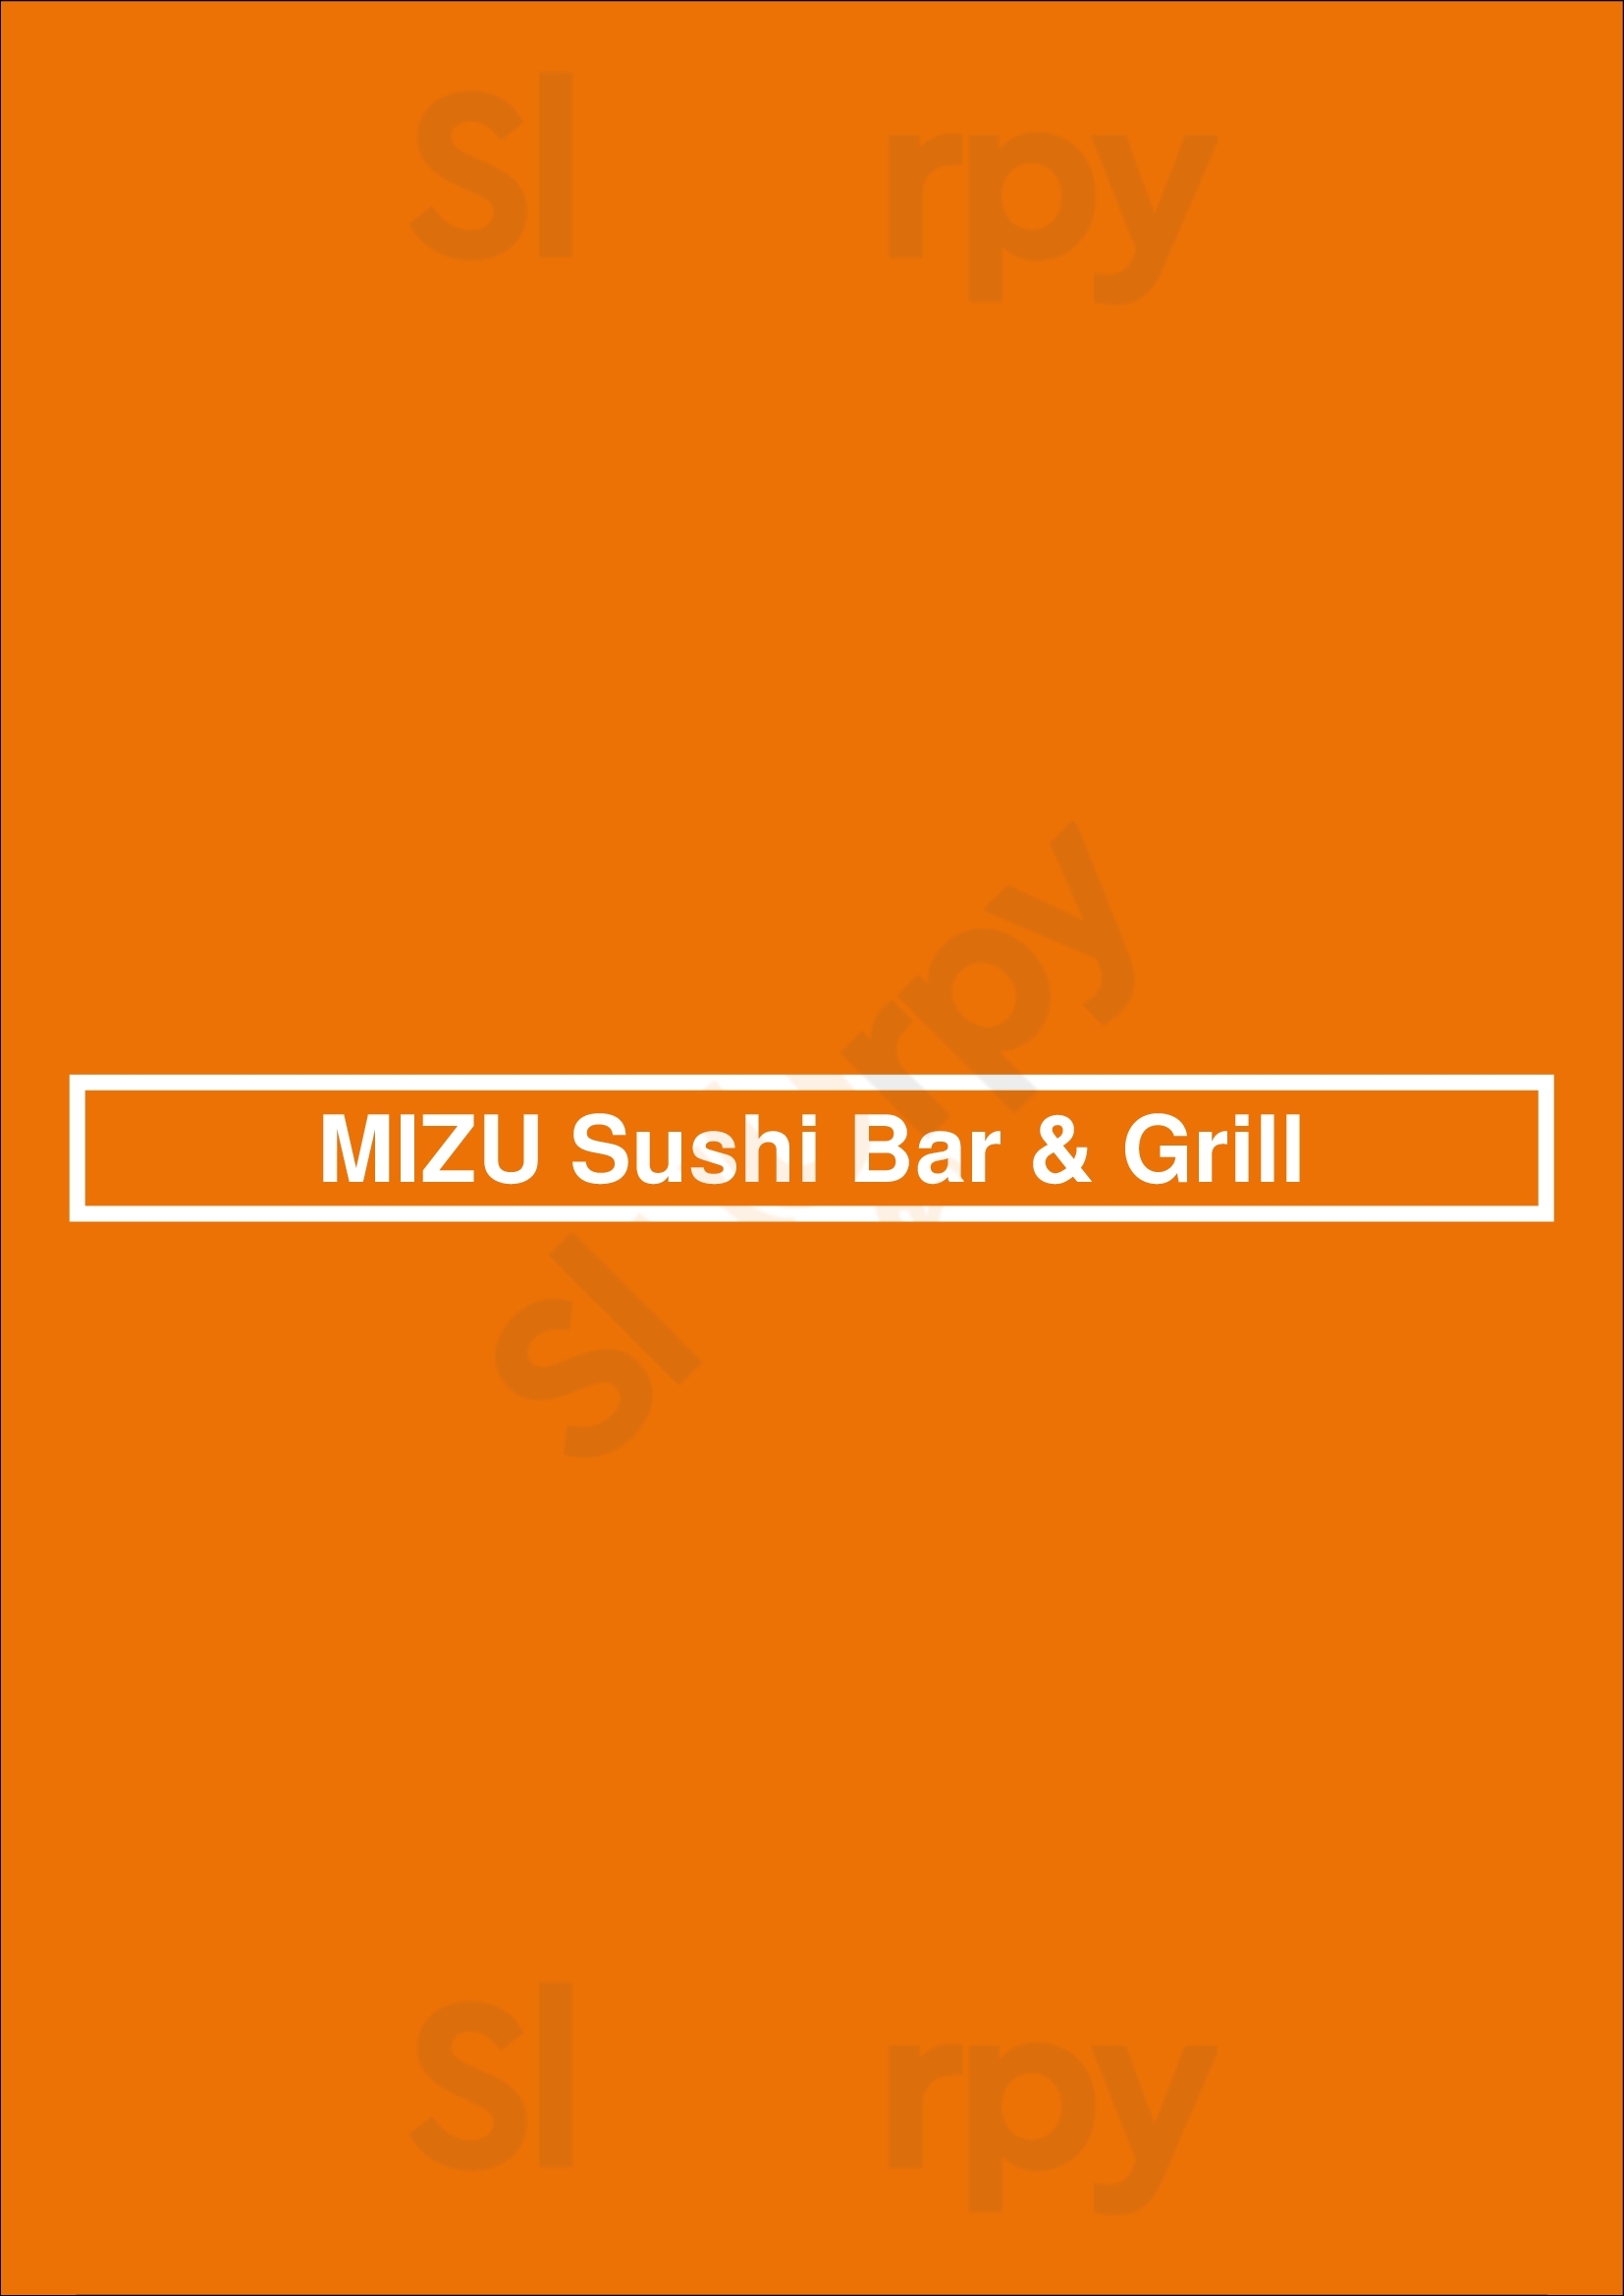 Mizu Sushi Bar & Grill San Jose Menu - 1